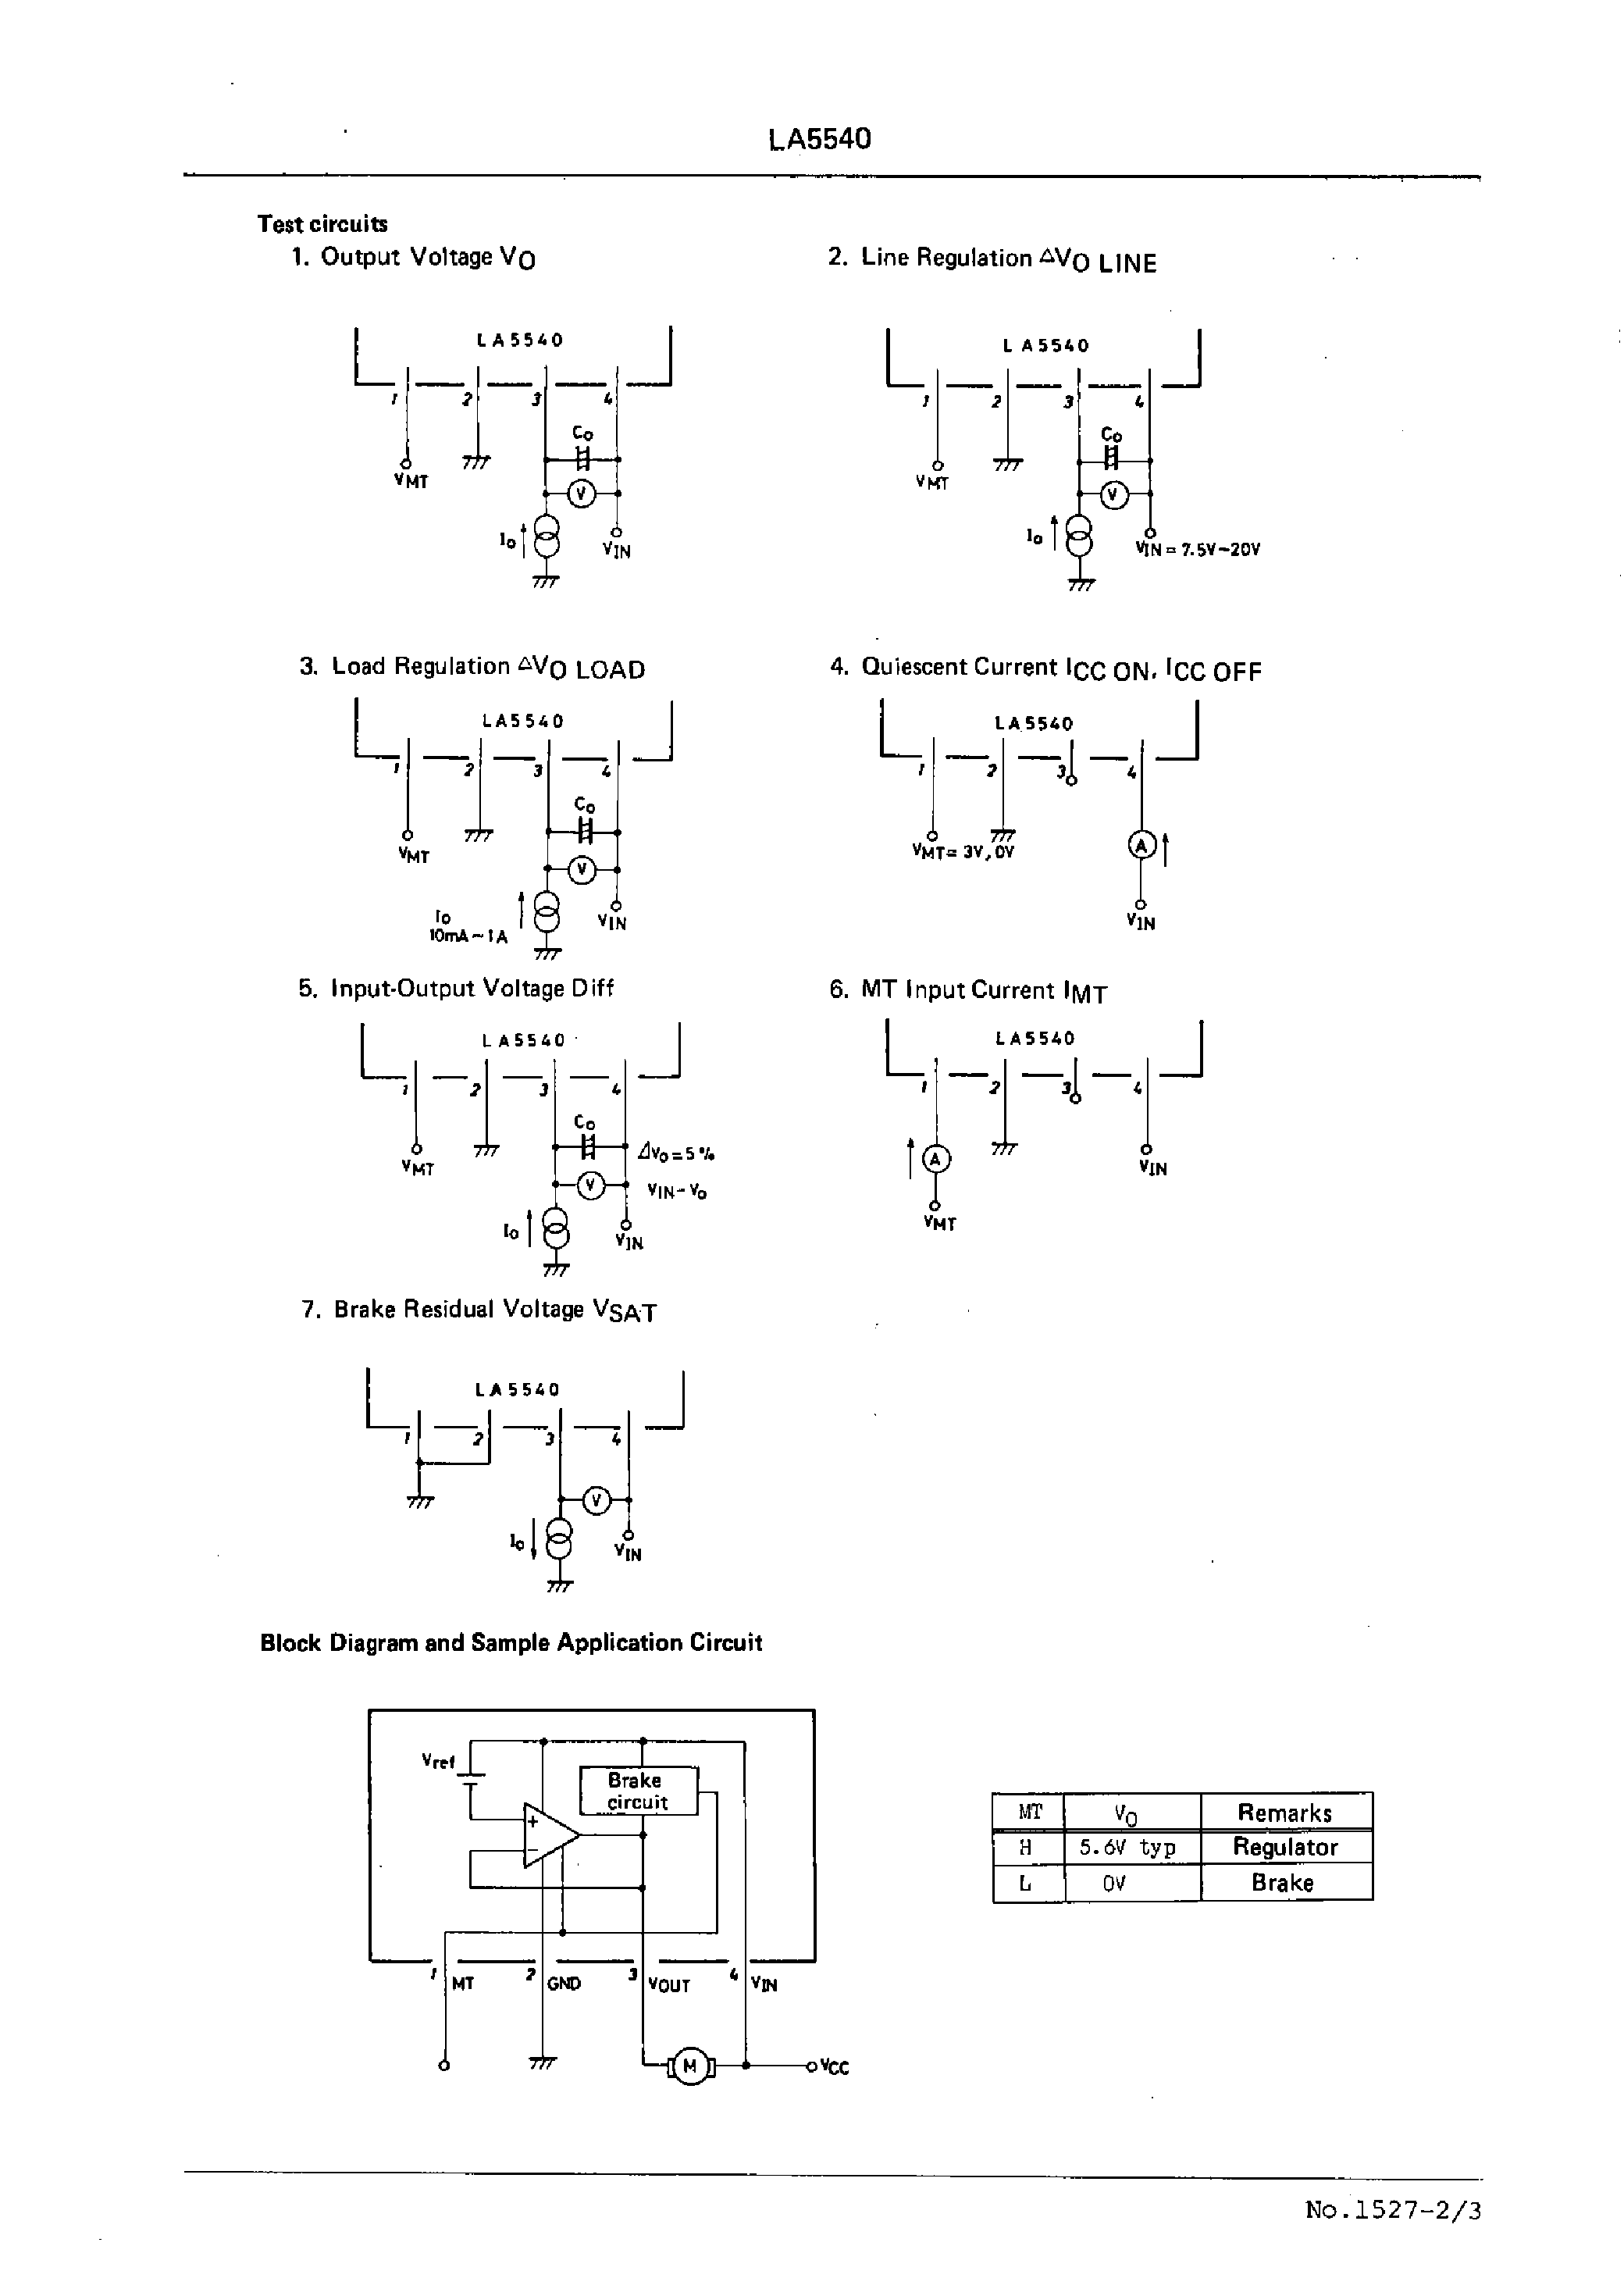 Datasheet LA5540 - Motor Driver with Regulator / Brake page 2